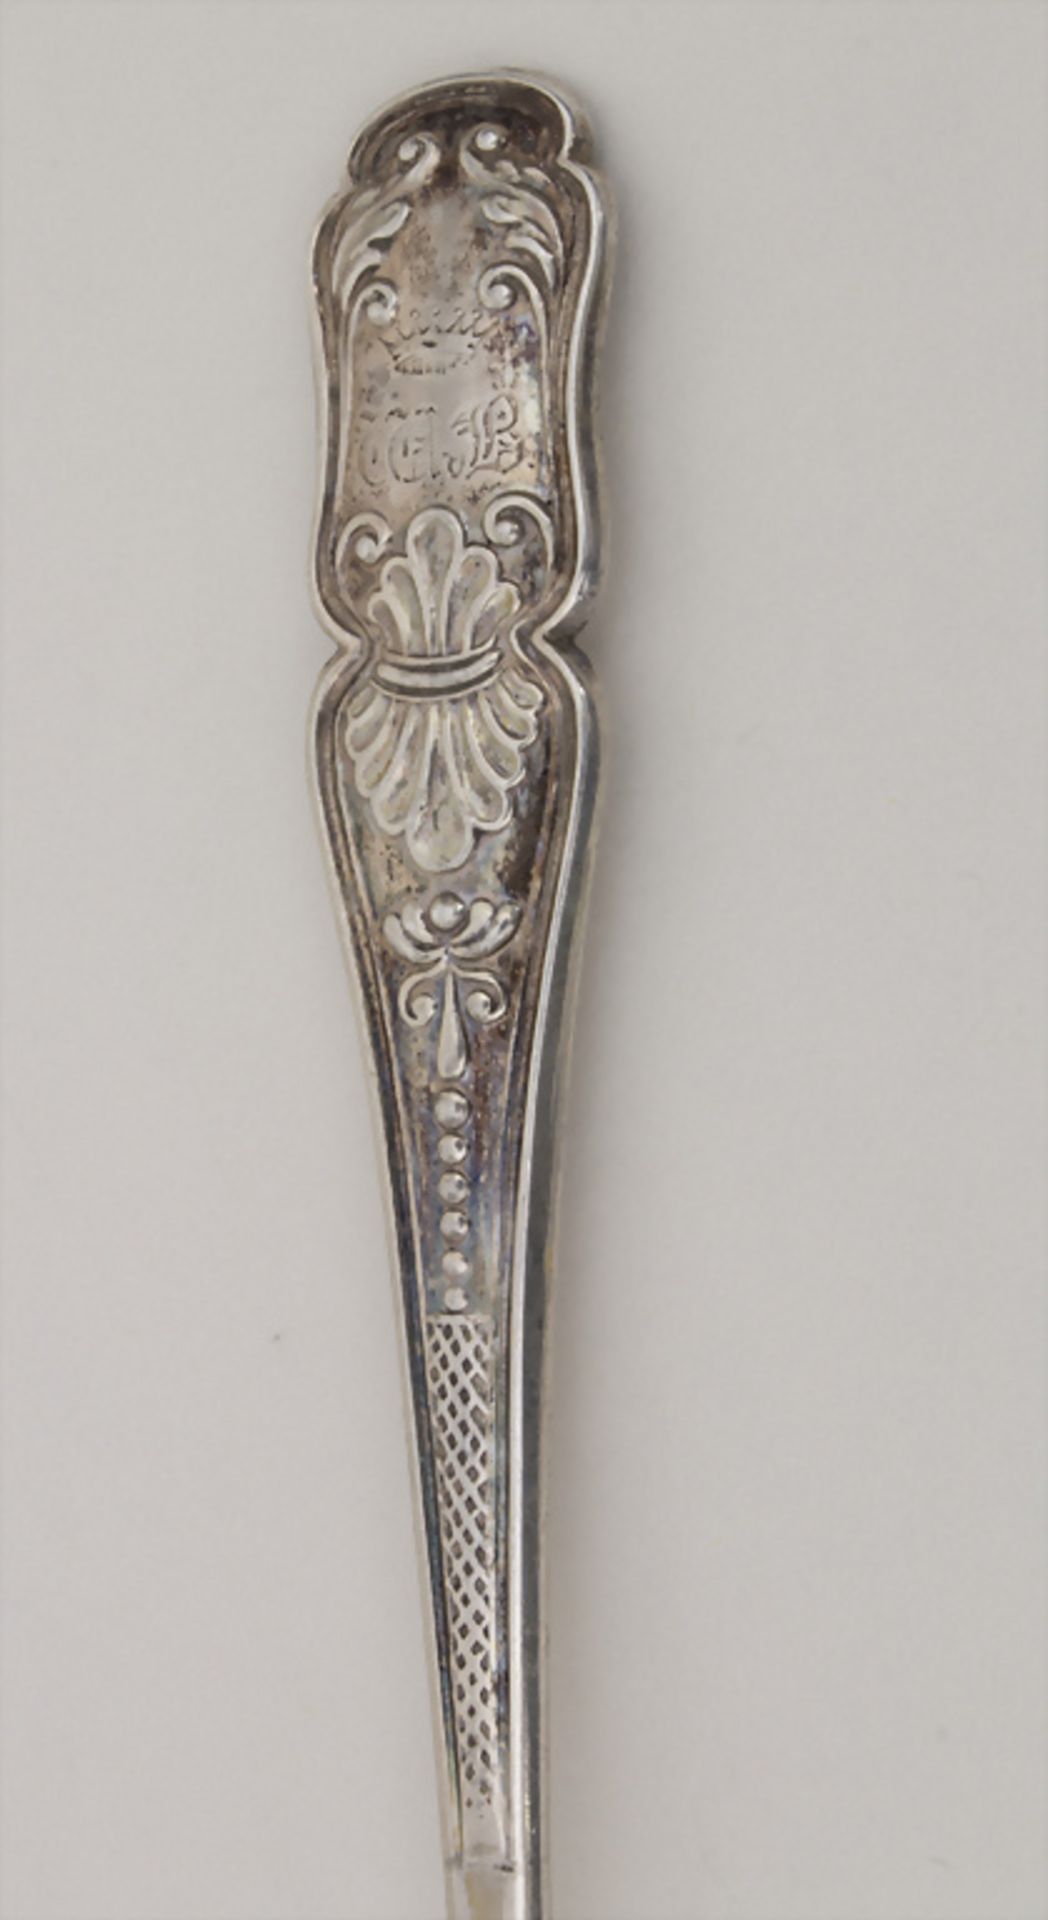 6 Teelöffel / 6 silver tea spoons, um 1800 - Bild 5 aus 6